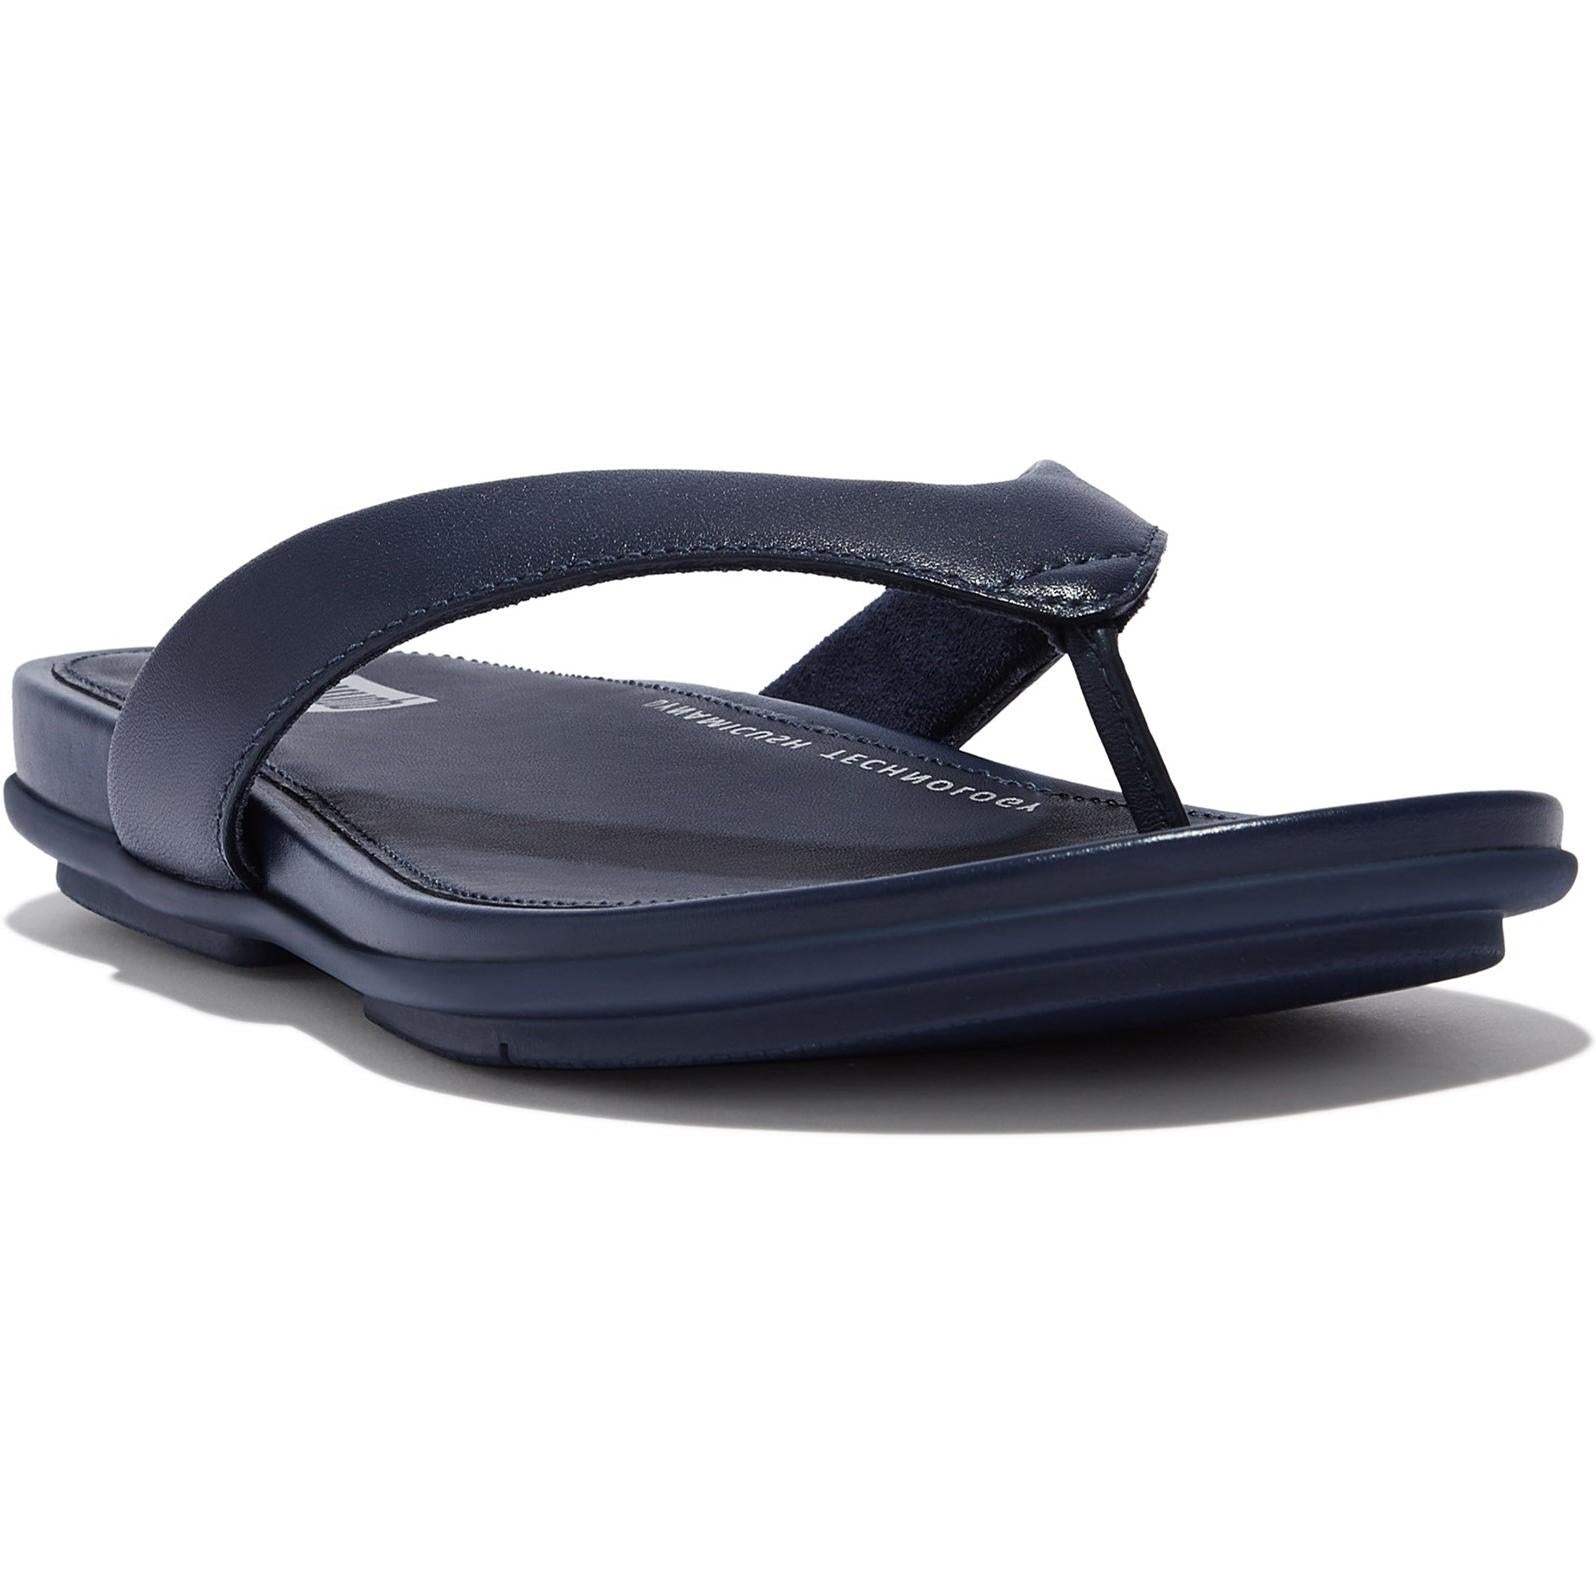 Fitflop Gracie Flip-Flops Sandals